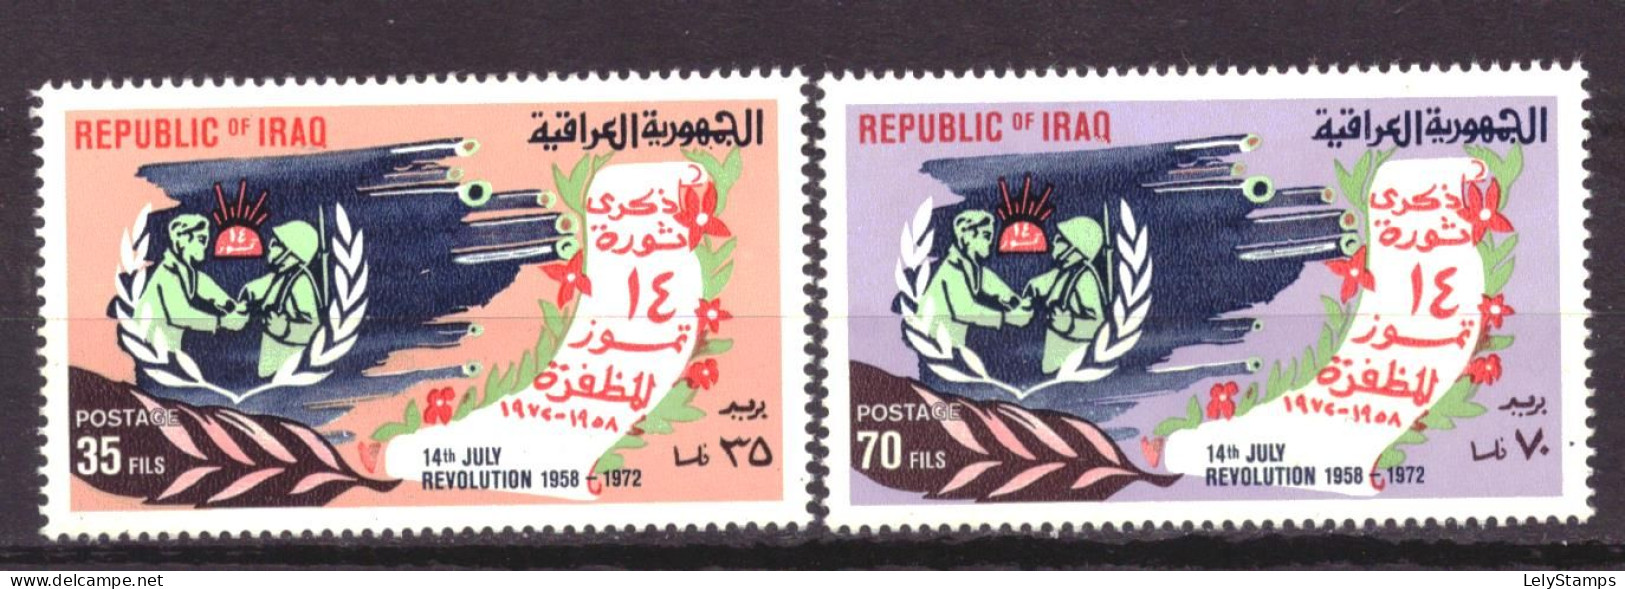 Irak / Iraq 739 & 740 MNH ** 14 July Revolution (1972) - Irak